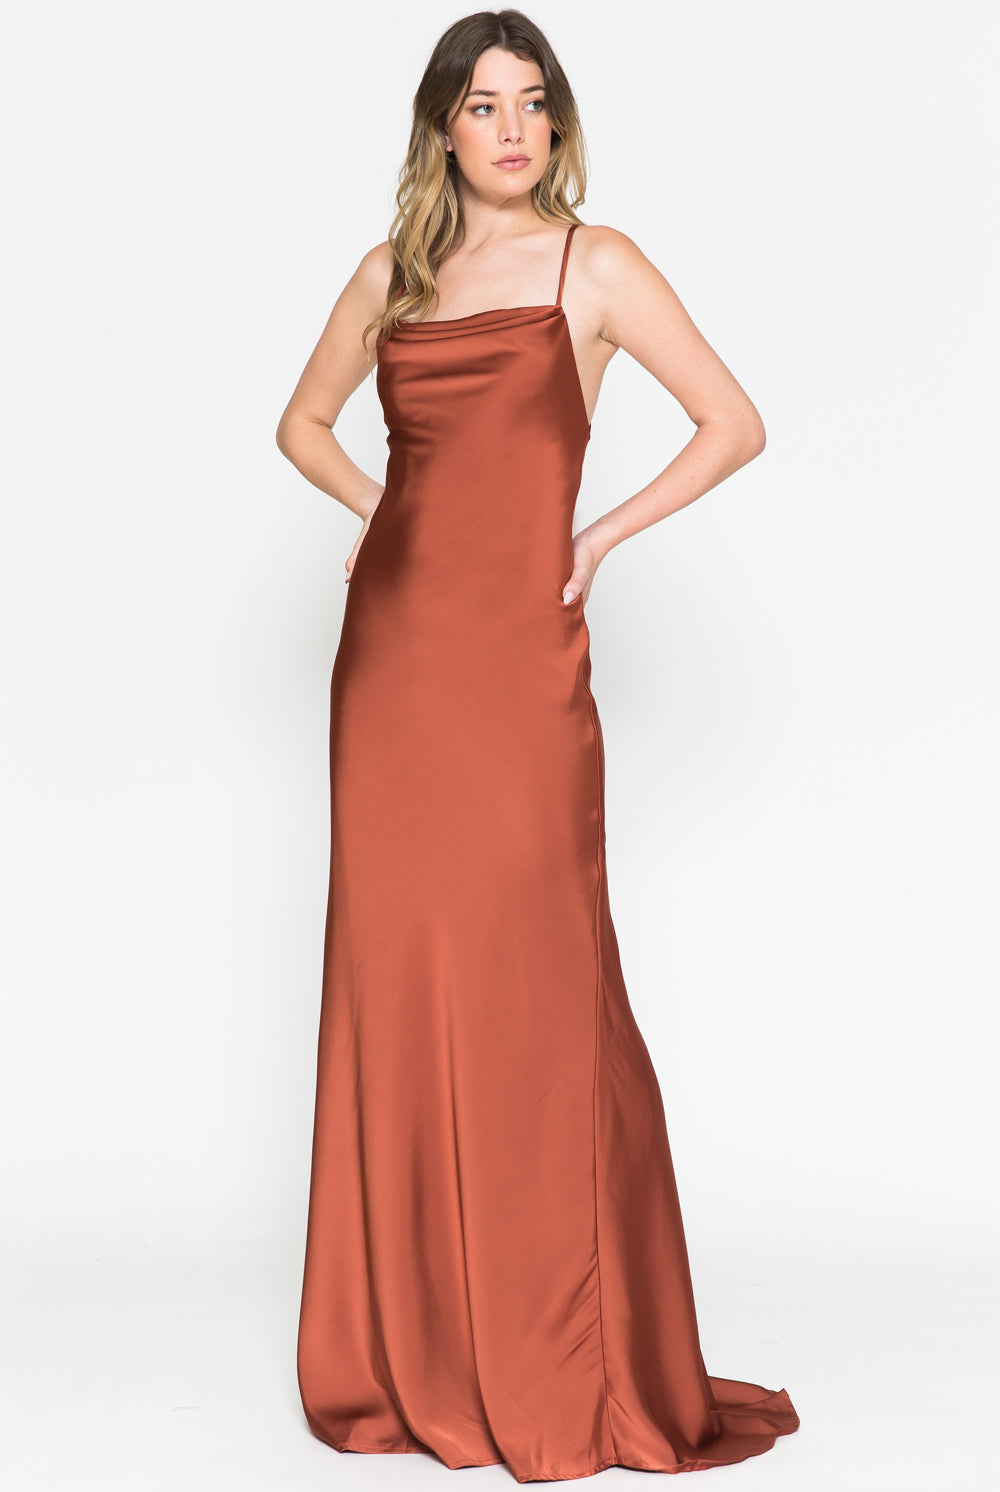 Cowl Neck Spaghetti Straps Satin Long Wedding & Evening Dress AC6111-Wedding Dress-smcfashion.com